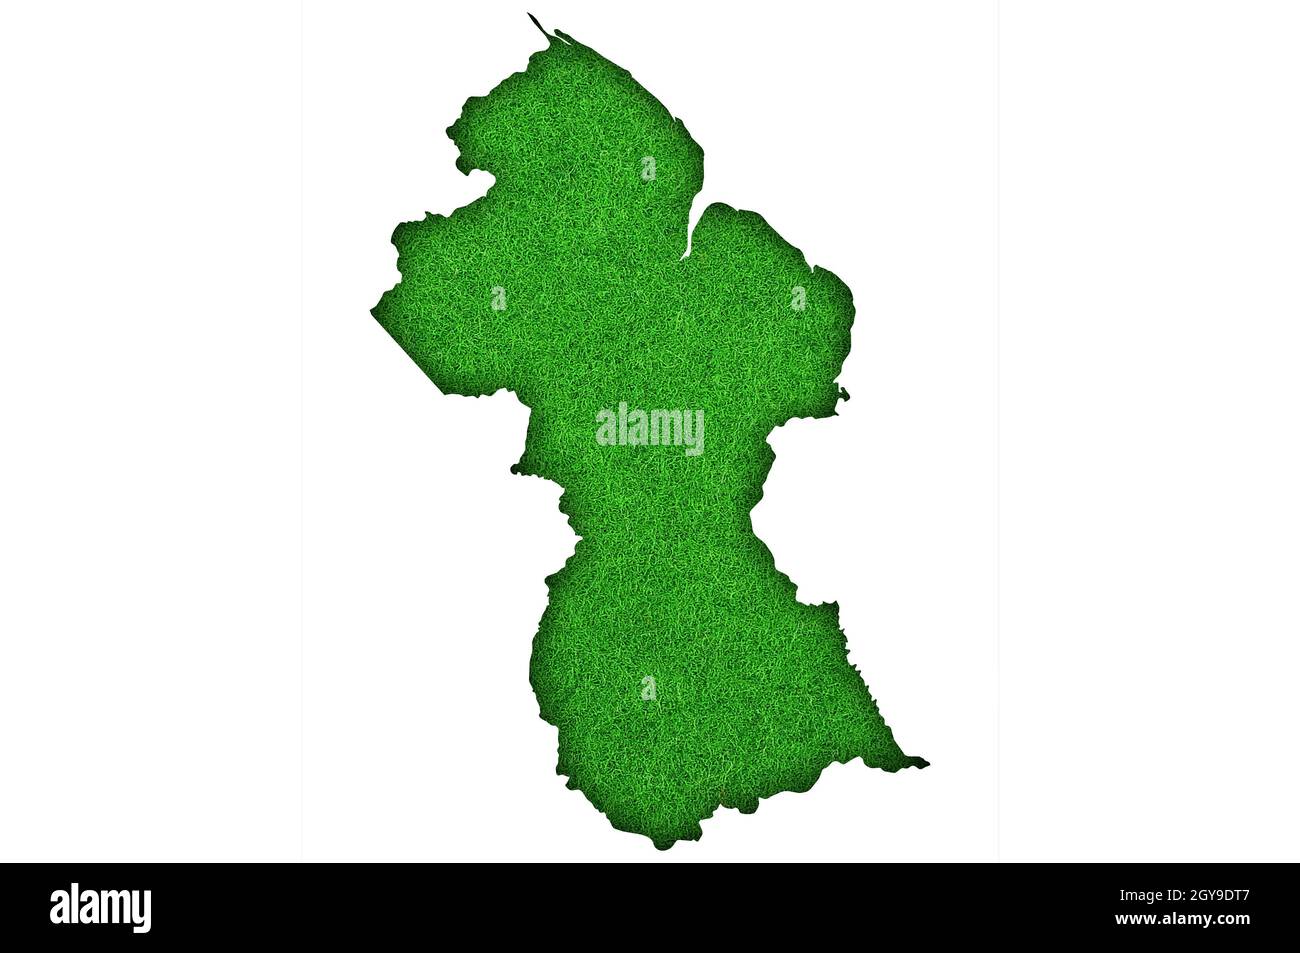 Map of Guyana on green felt Stock Photo